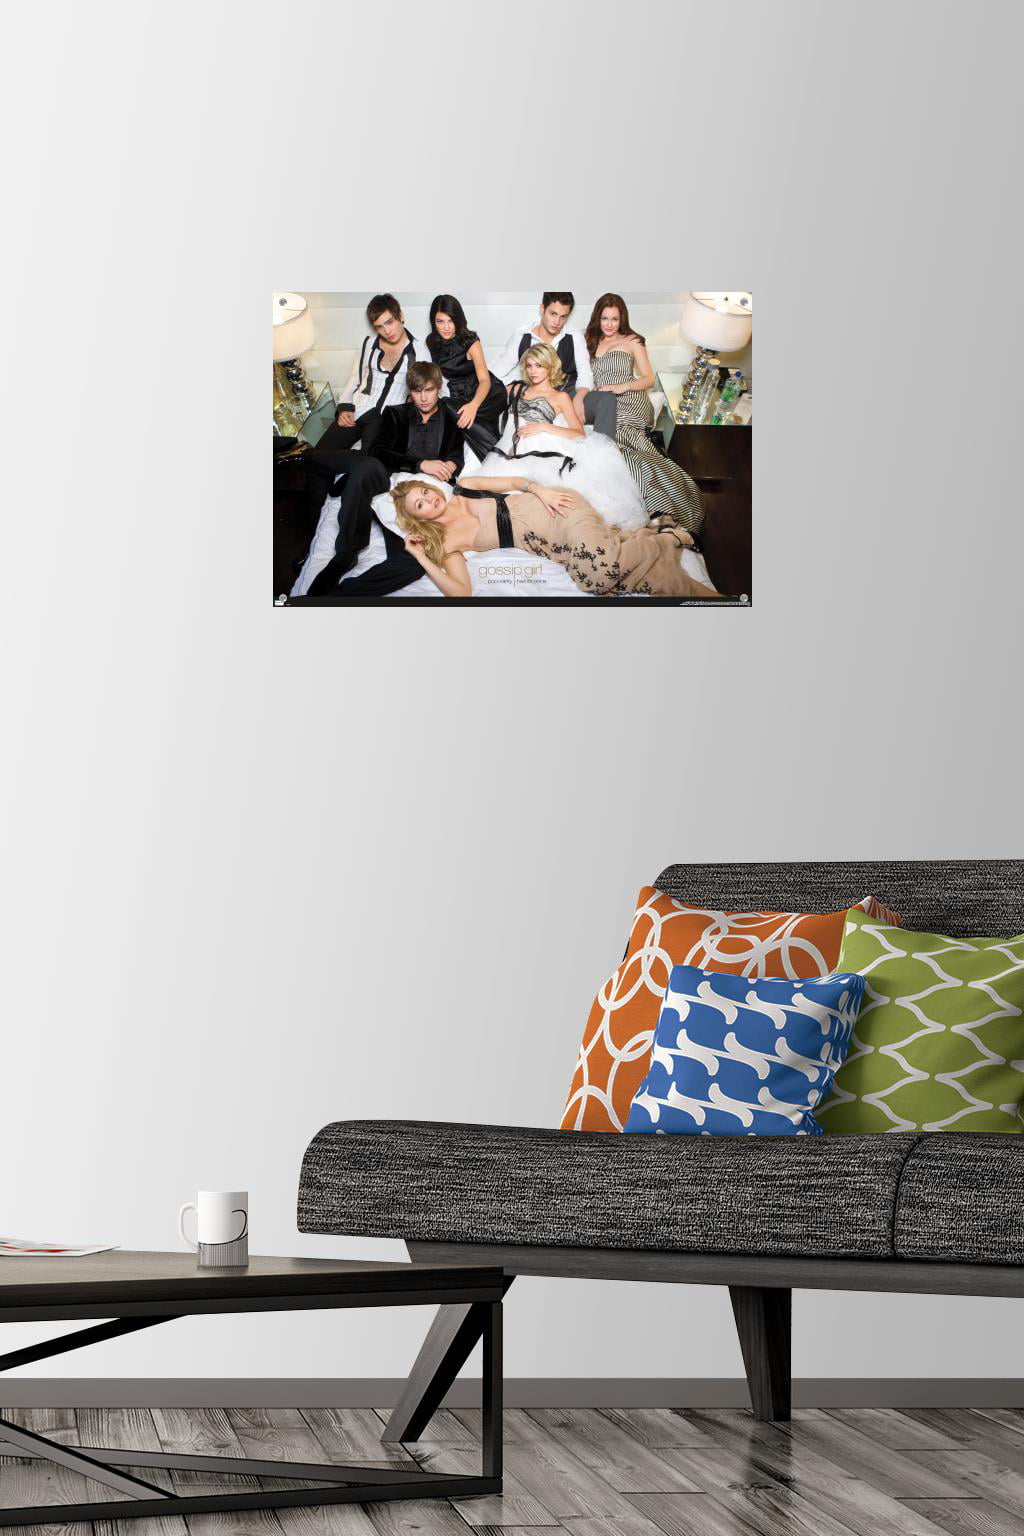 Gossip Girl - Group Wall Poster, 14.725 x 22.375, Framed 